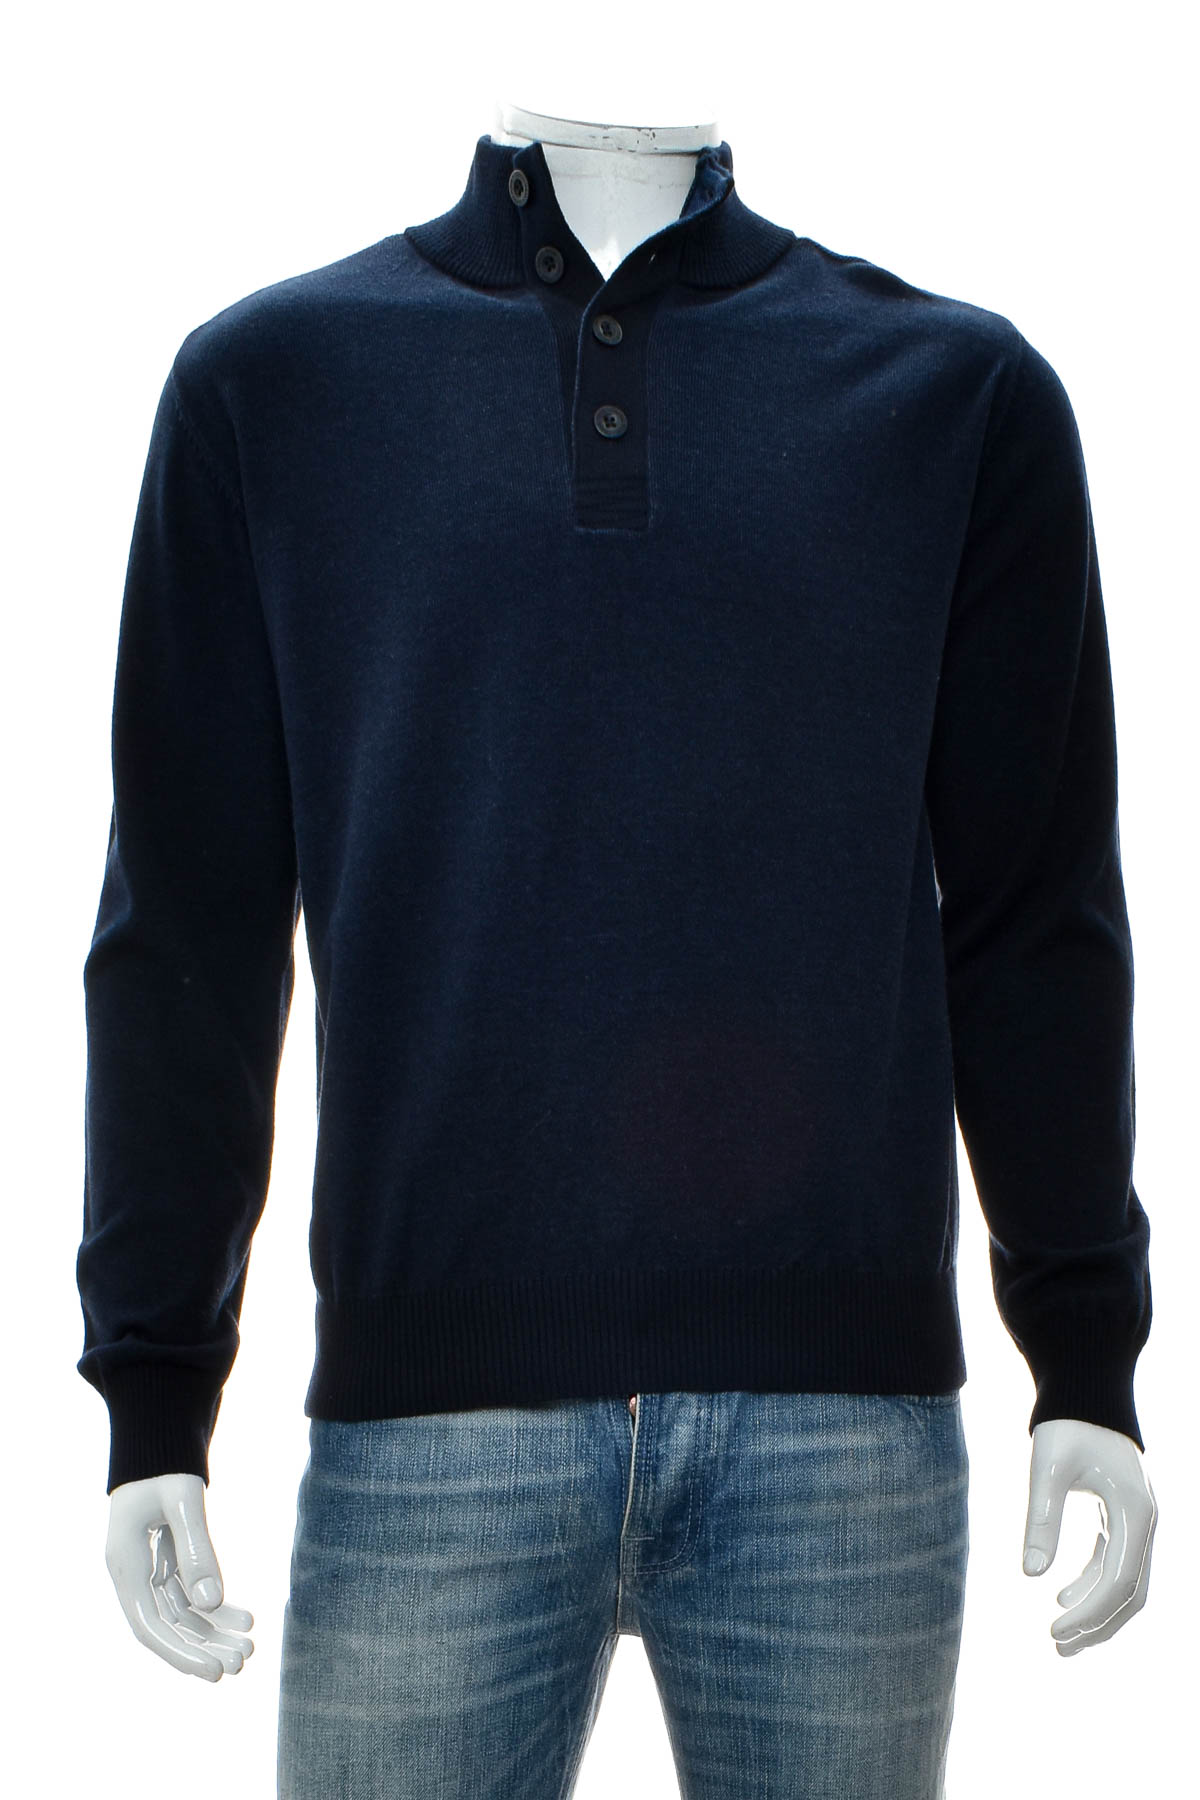 Men's sweater - Charles Vogele - 0